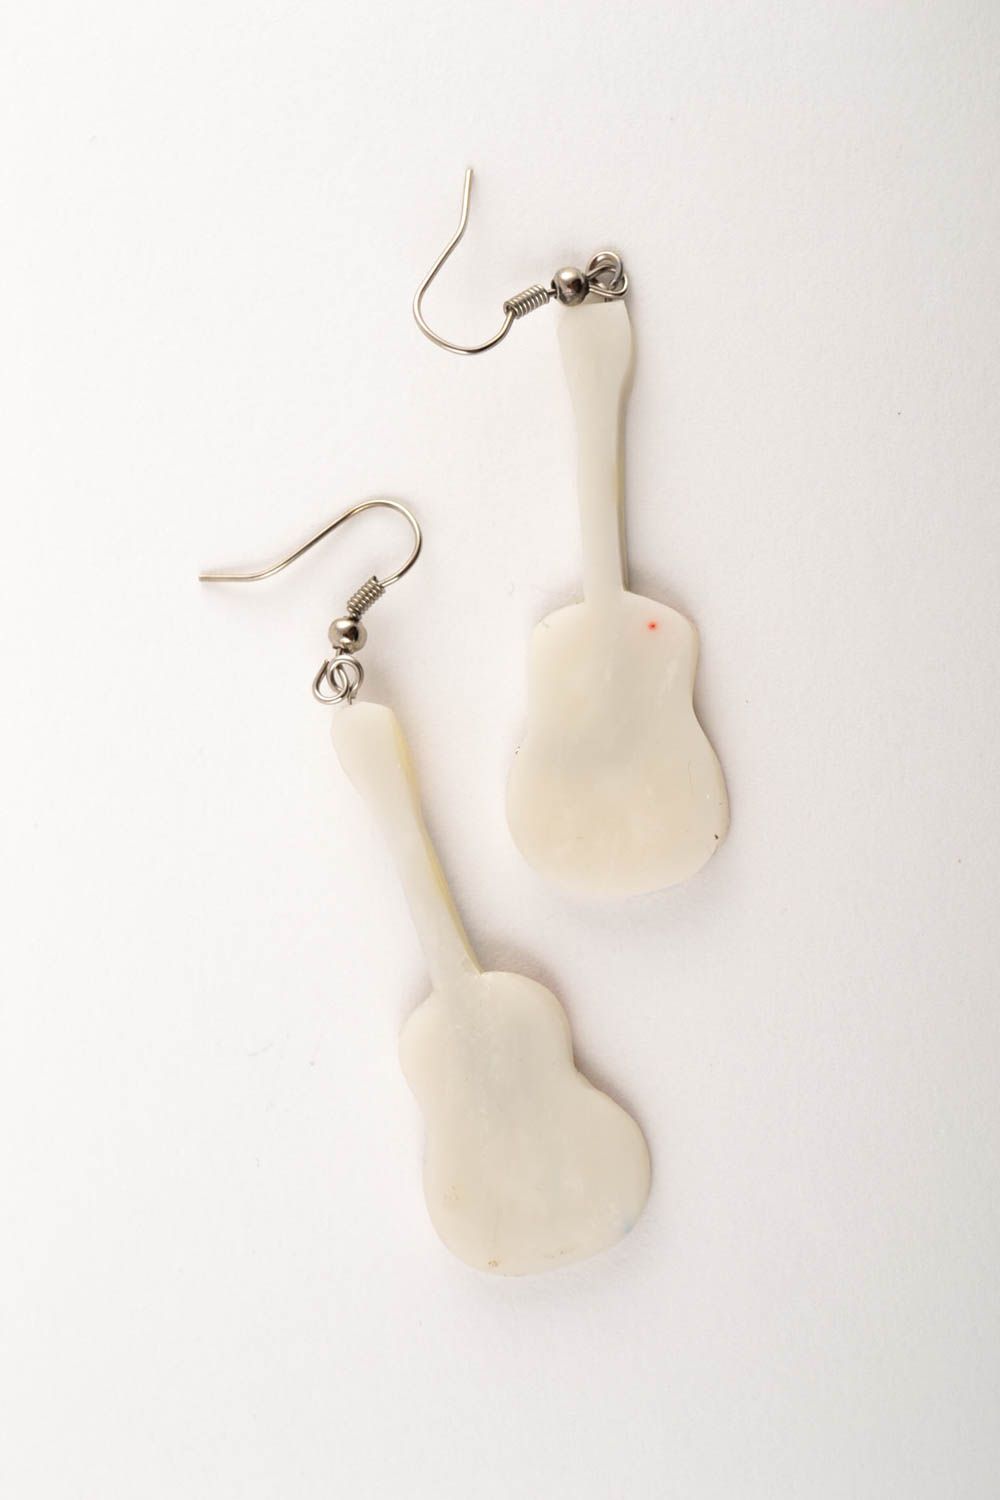 Unusual handmade plastic earrings artisan jewelry designs fashion accessories photo 2